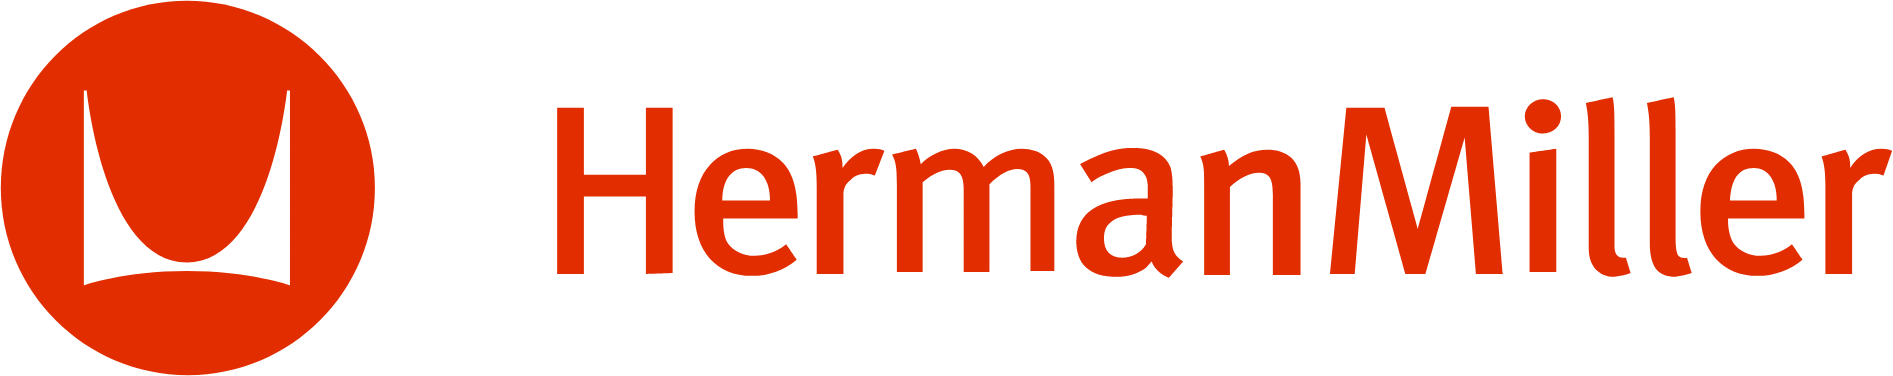 Herman Miller
 logo large (transparent PNG)